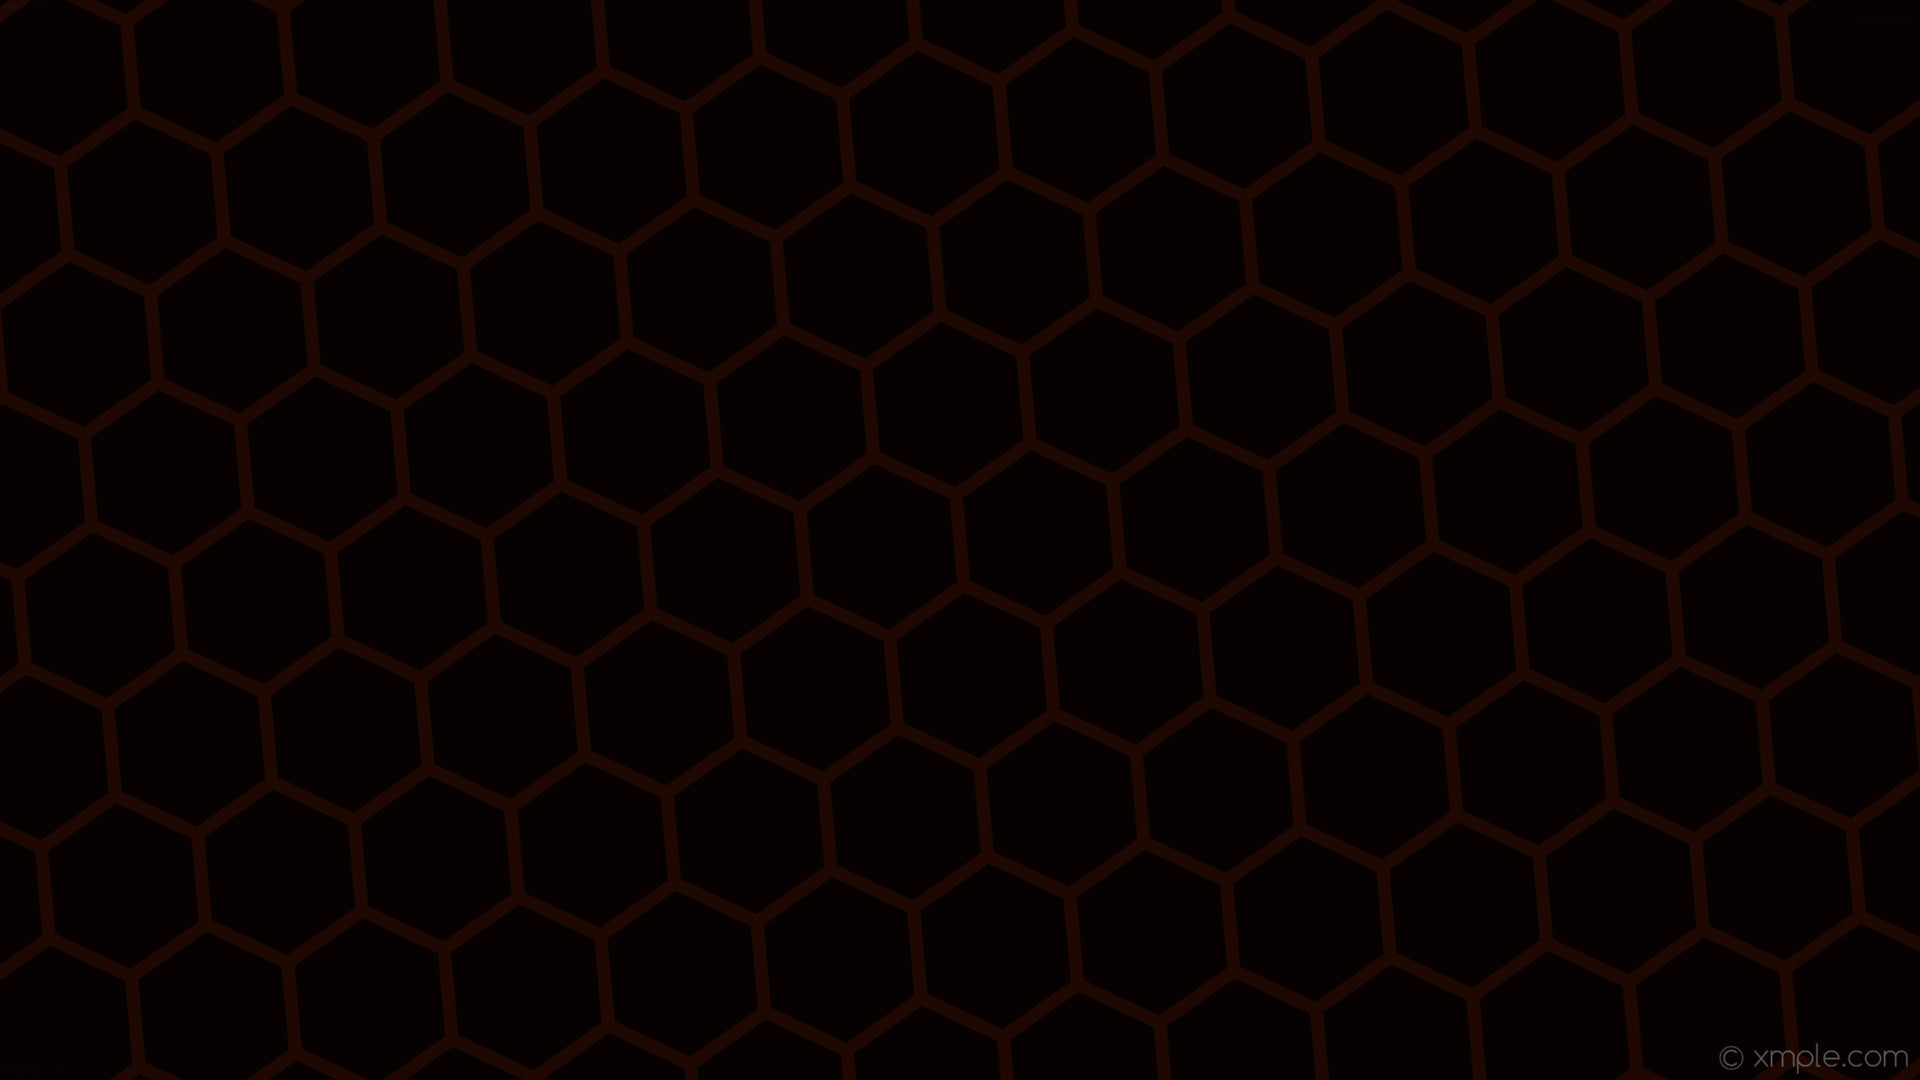 1920x1080 wallpaper beehive hexagon red black honeycomb dark red #070201 #1f0802  diagonal 5Â° 13px